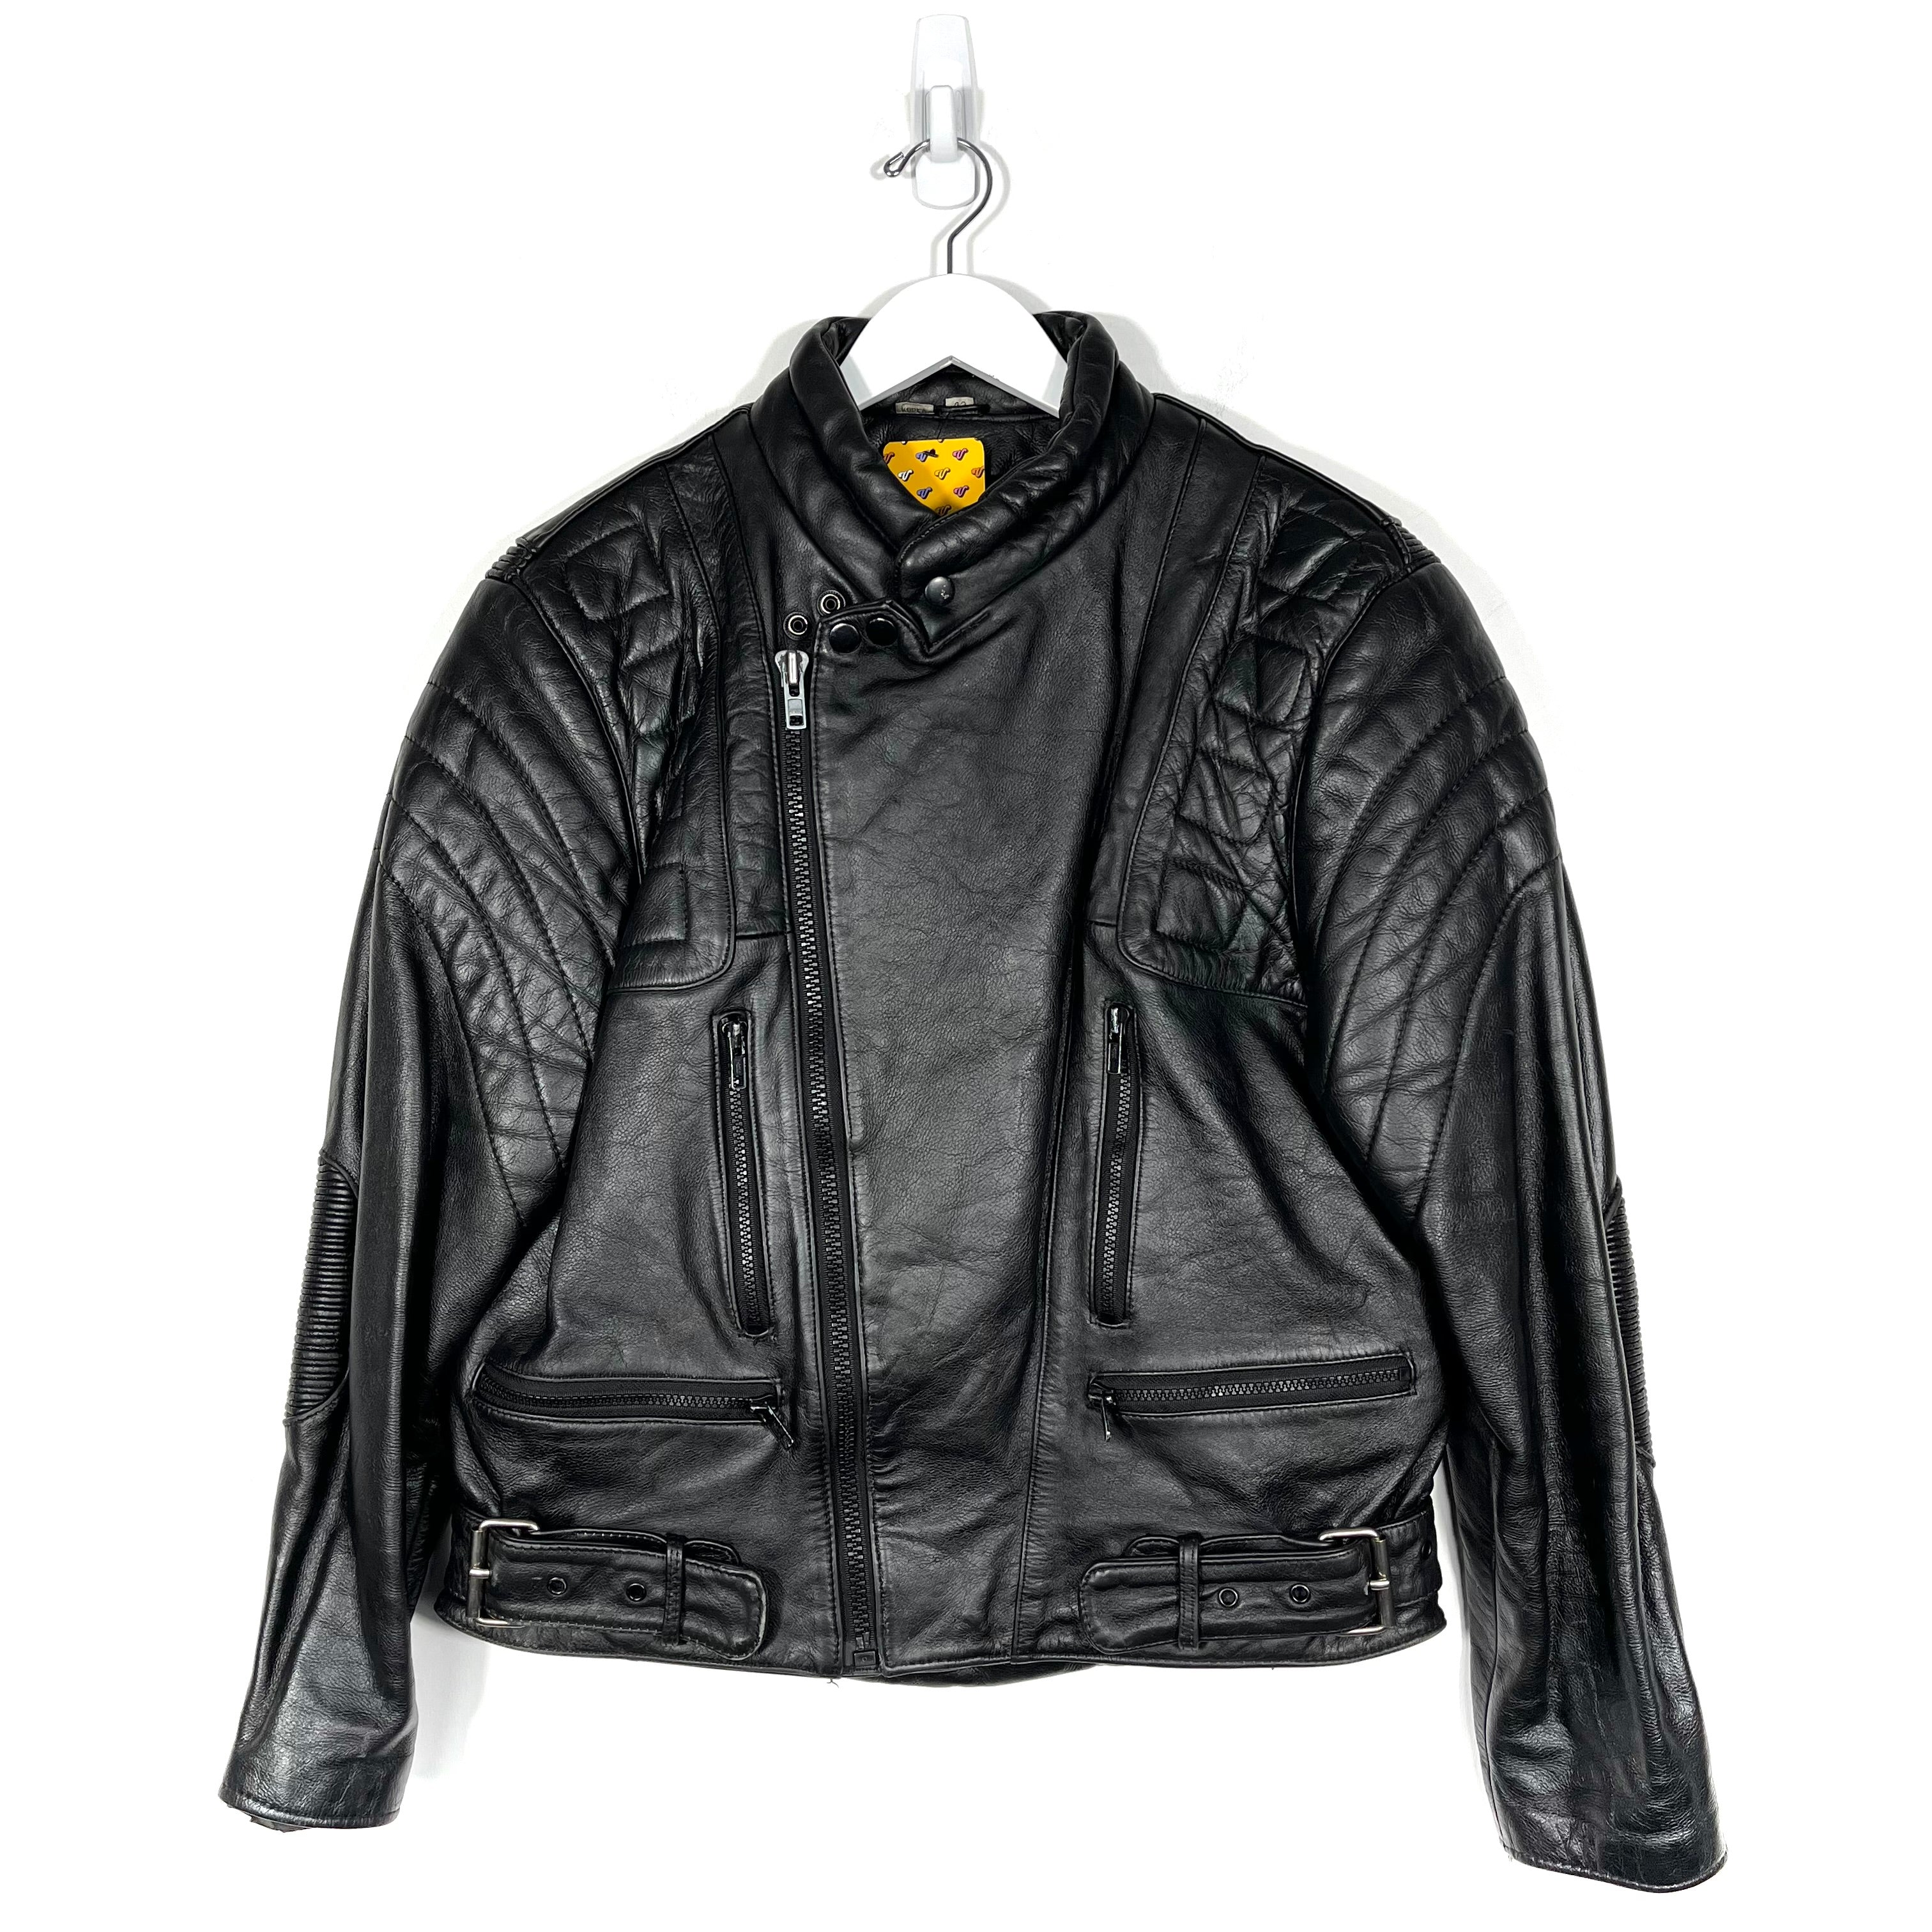 Vintage Open Road Collection Biker Leather Jacket - Women's Medium